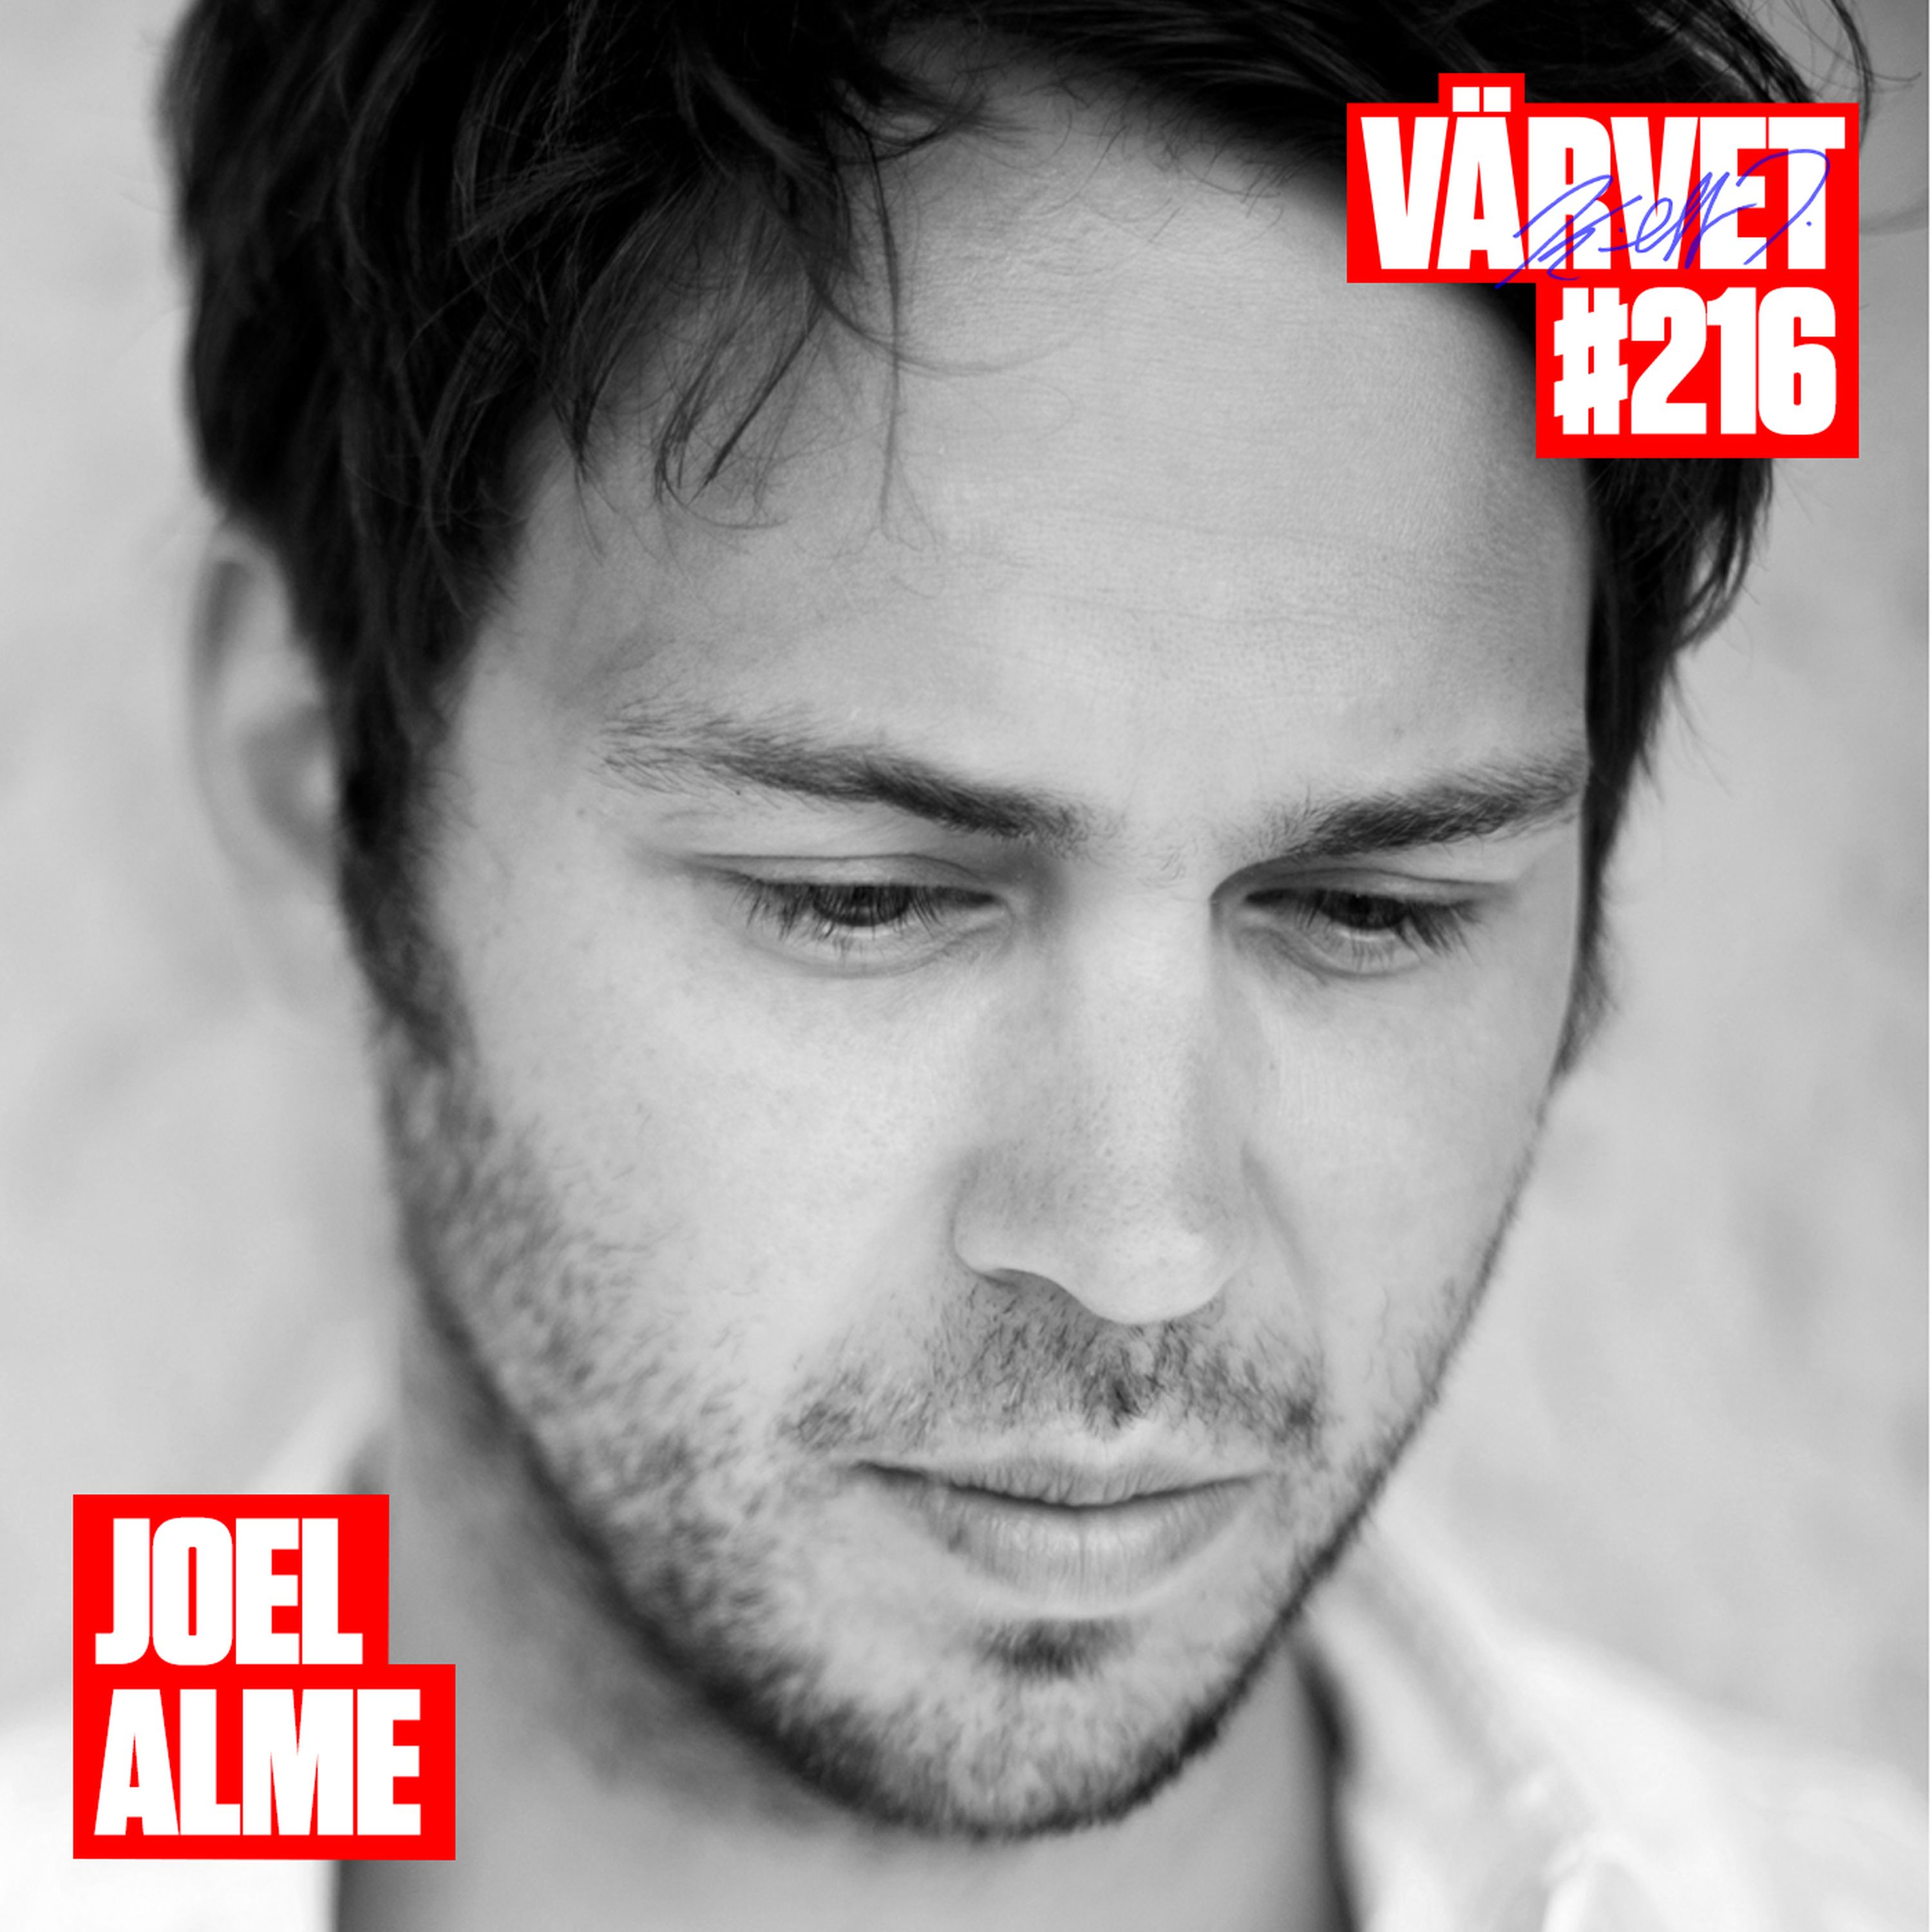 #216: Joel Alme